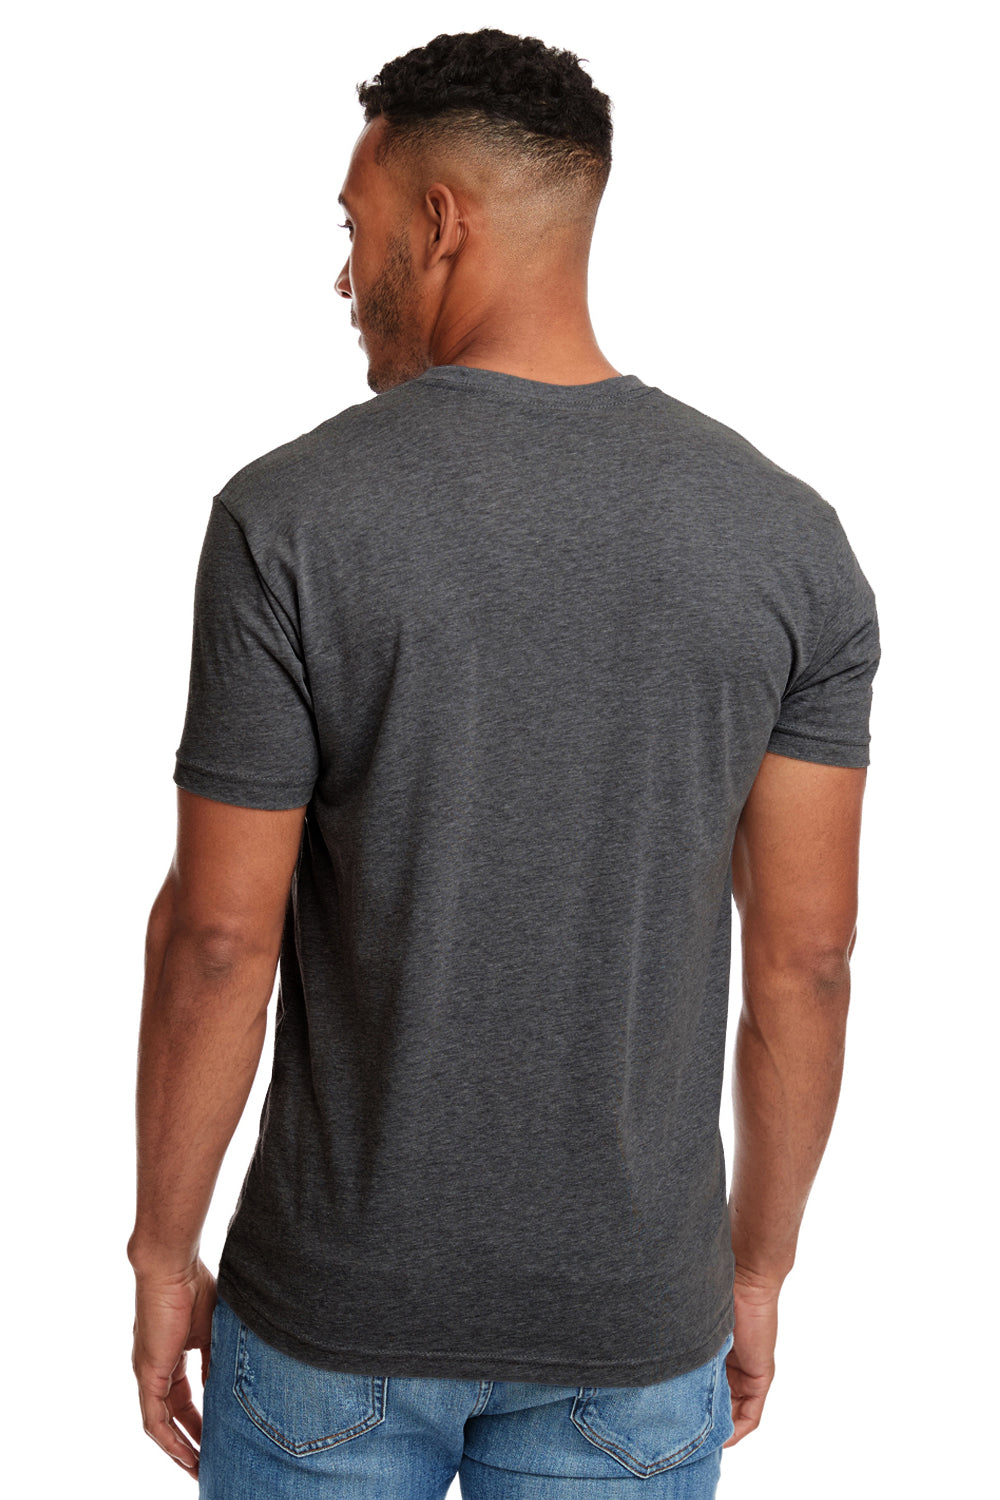 Next Level N6210 Mens CVC Jersey Short Sleeve Crewneck T-Shirt Charcoal Grey Back